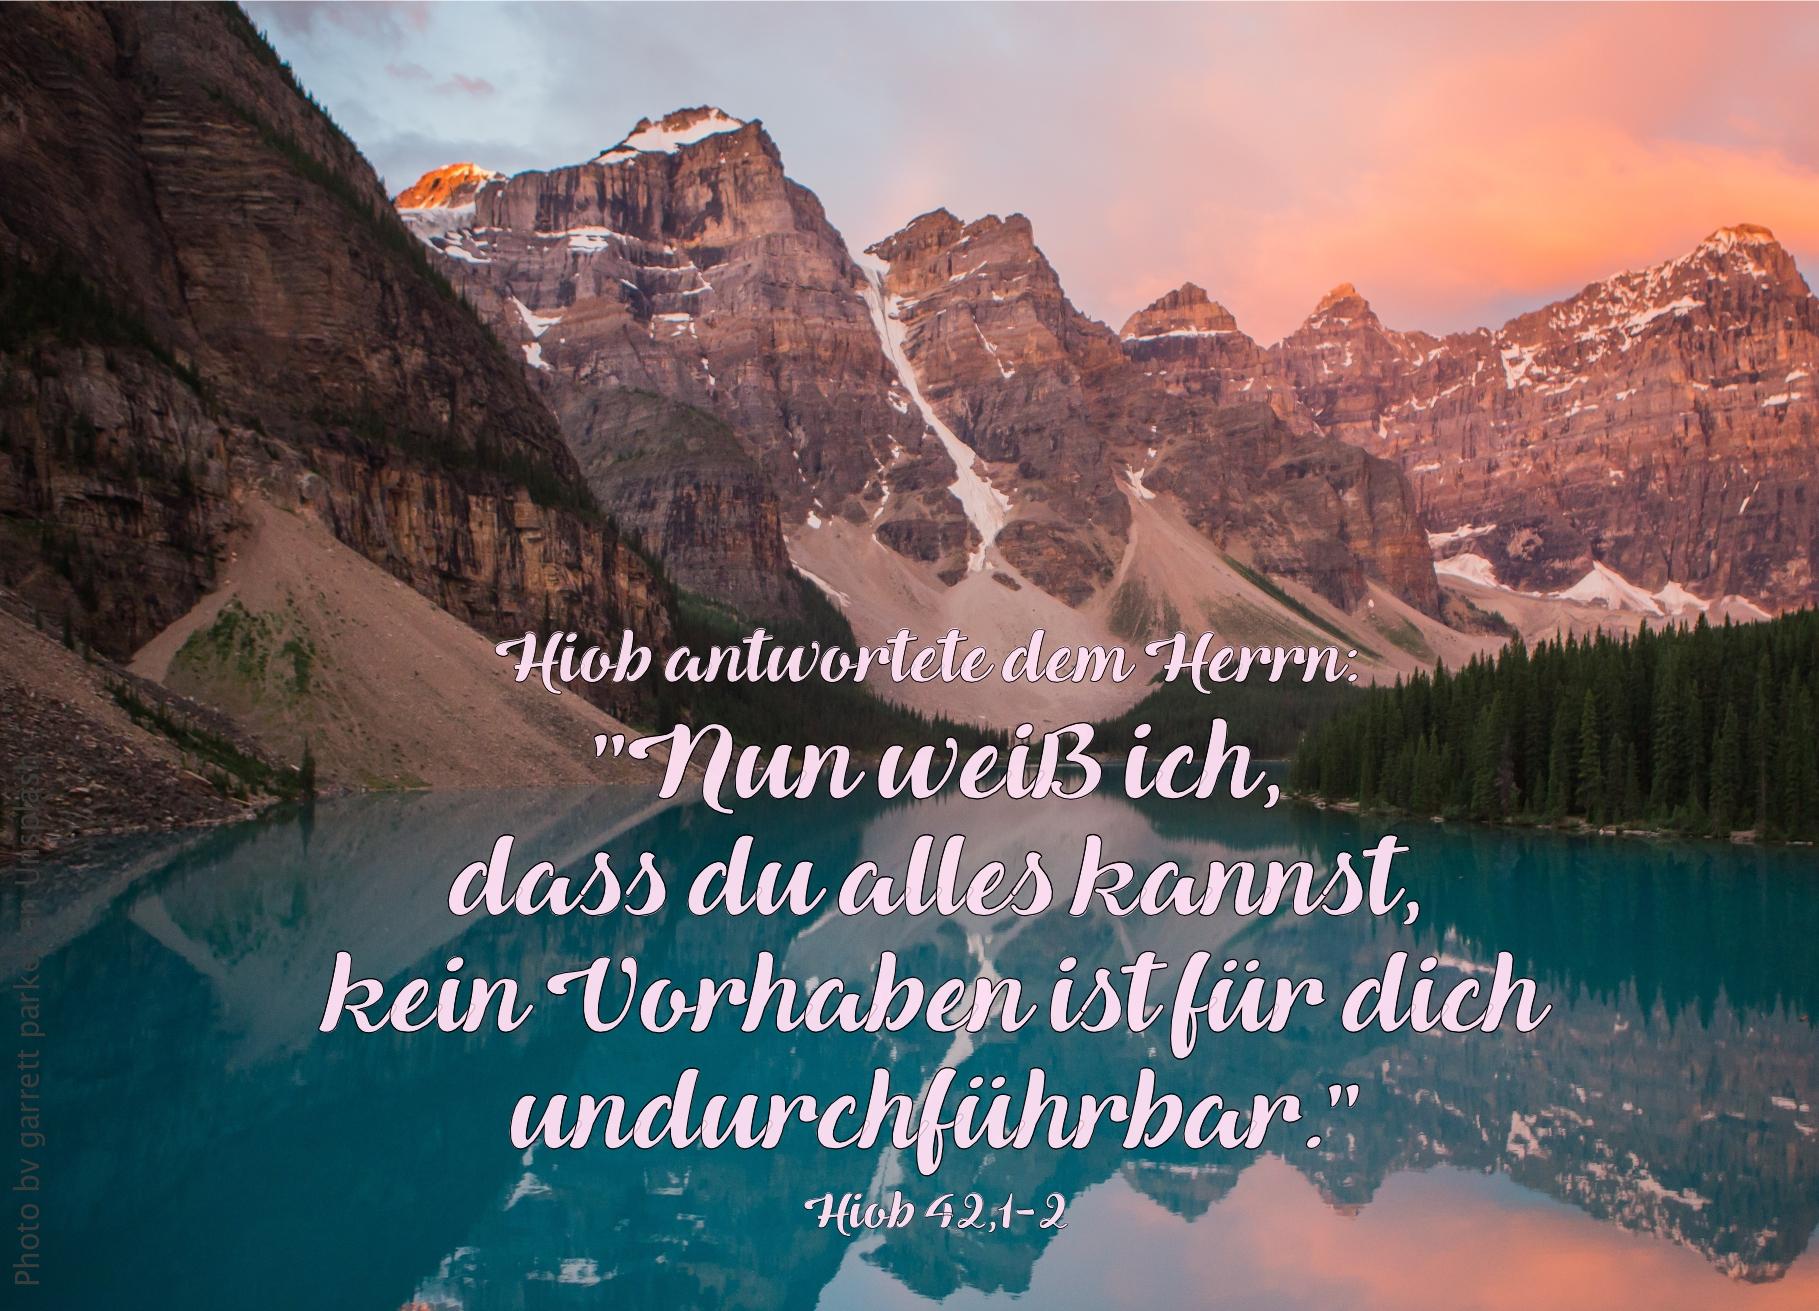 alt="bergsee_erwartet_bibelhoerbuch_hiob_antwortet_dem_herrn"